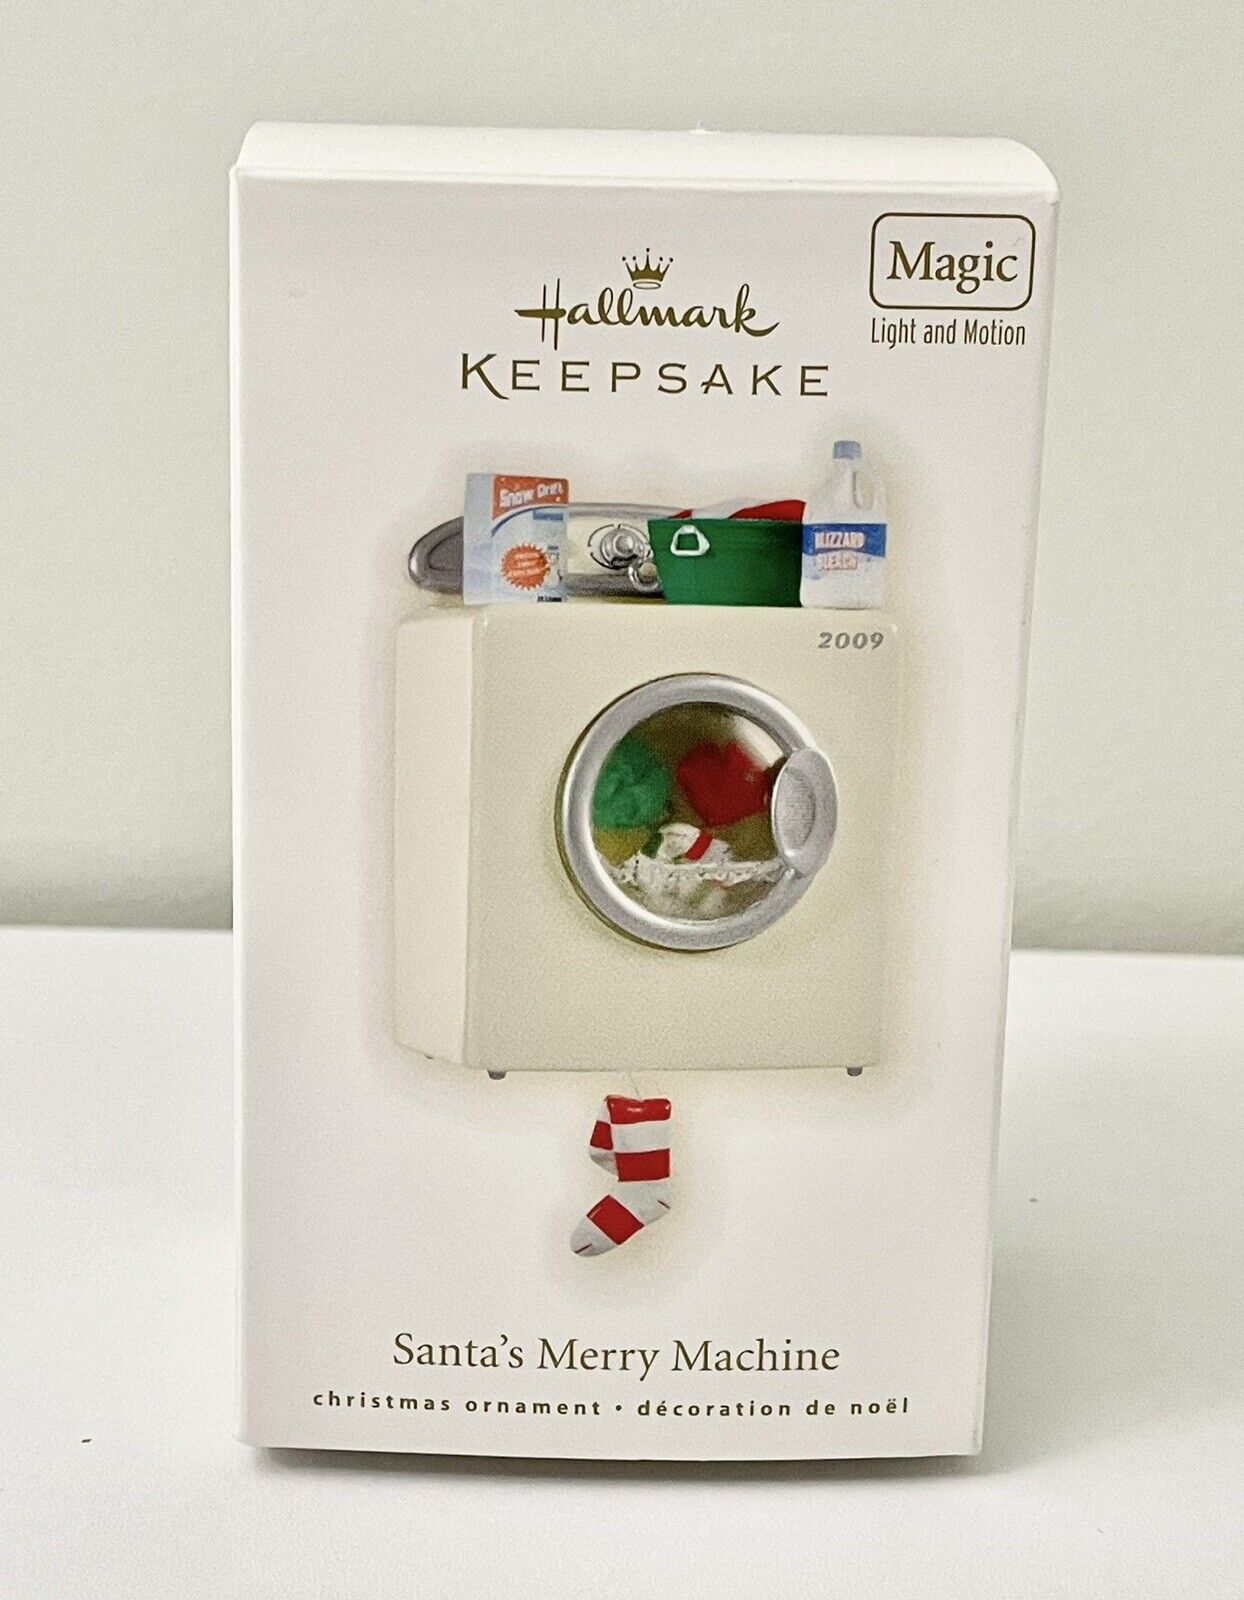 2009 Hallmark Keepsake Santa’s Merry Machine Ornament Magic Light & Motion